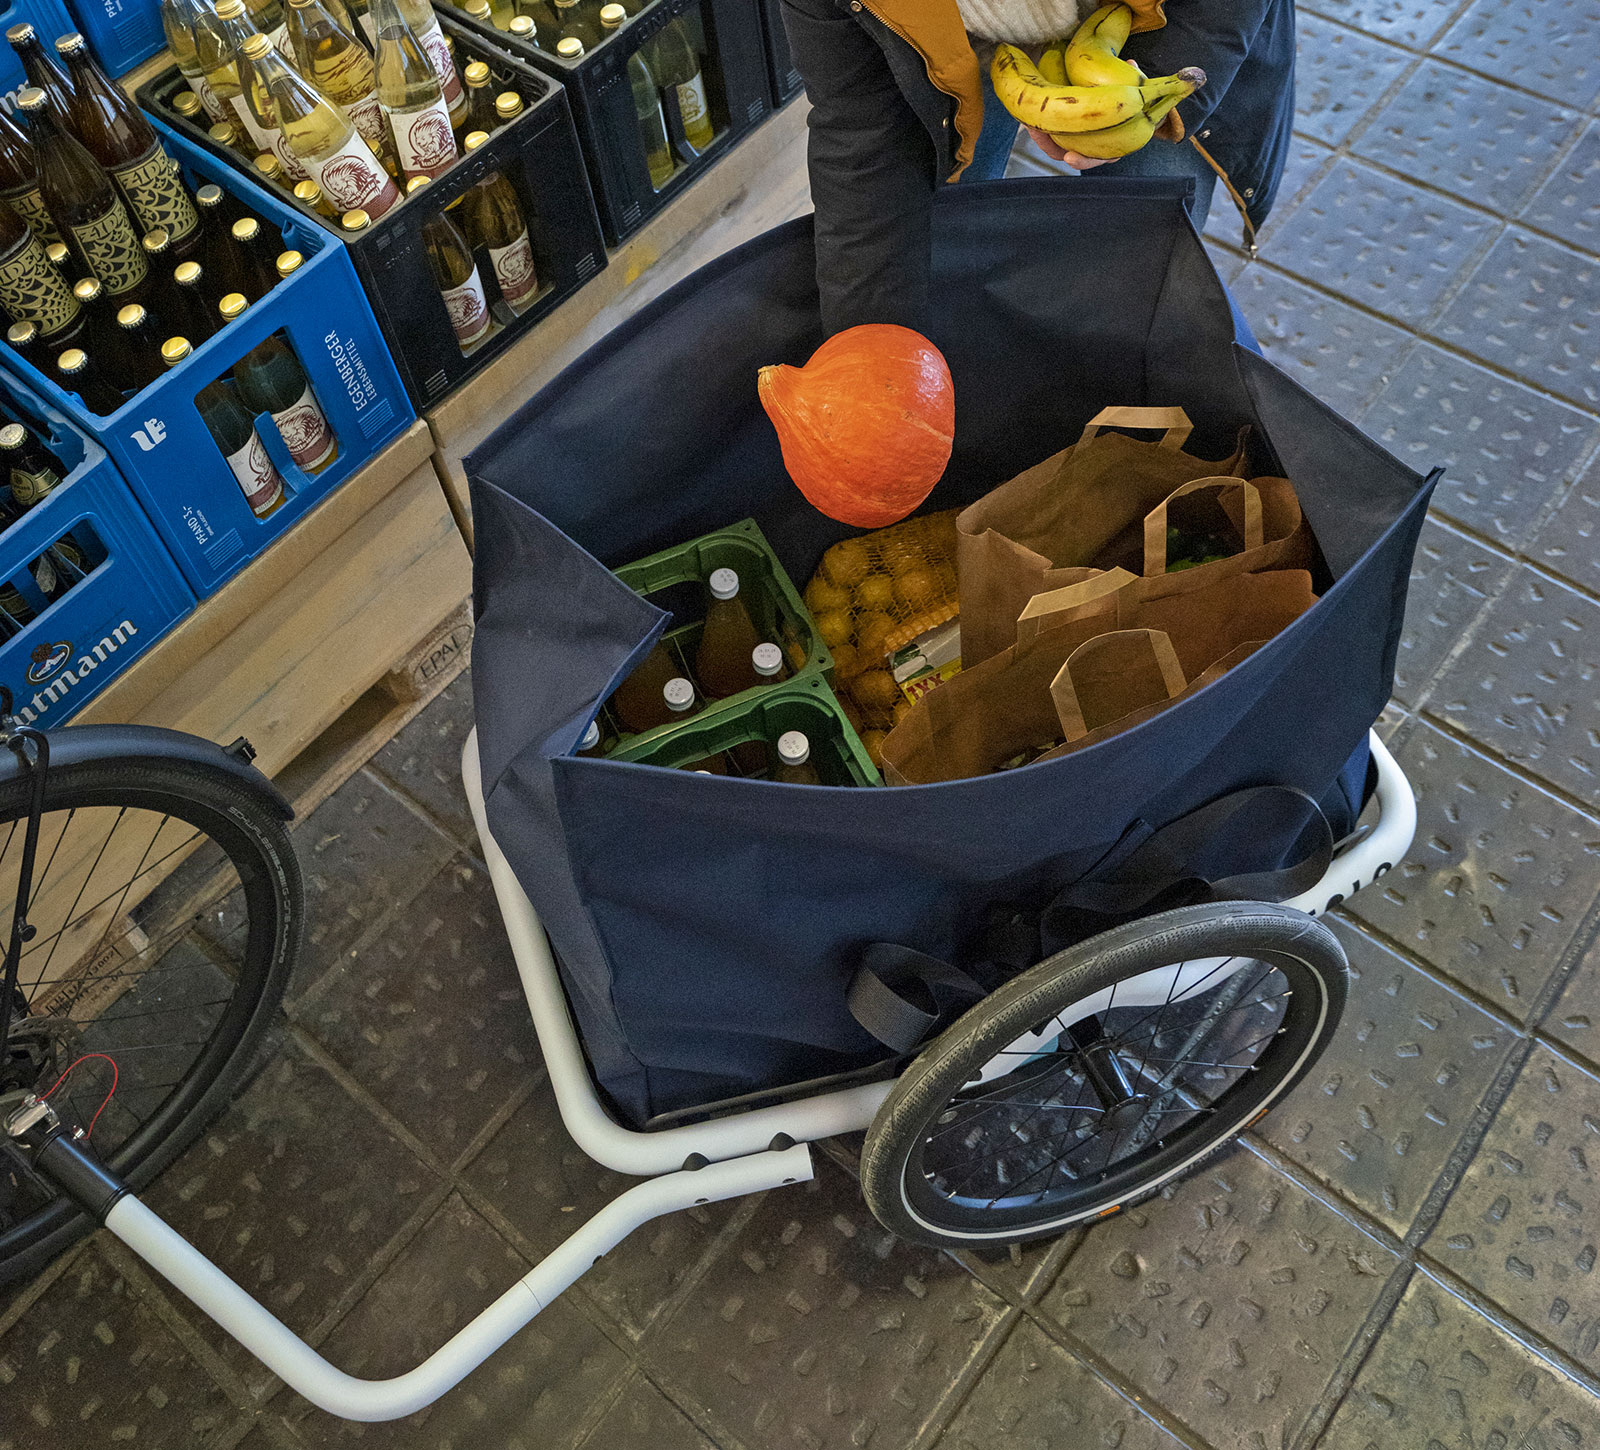 Veolo Bike Trailer, a lightweight modular bicycle cargo trailer, grocery shopping